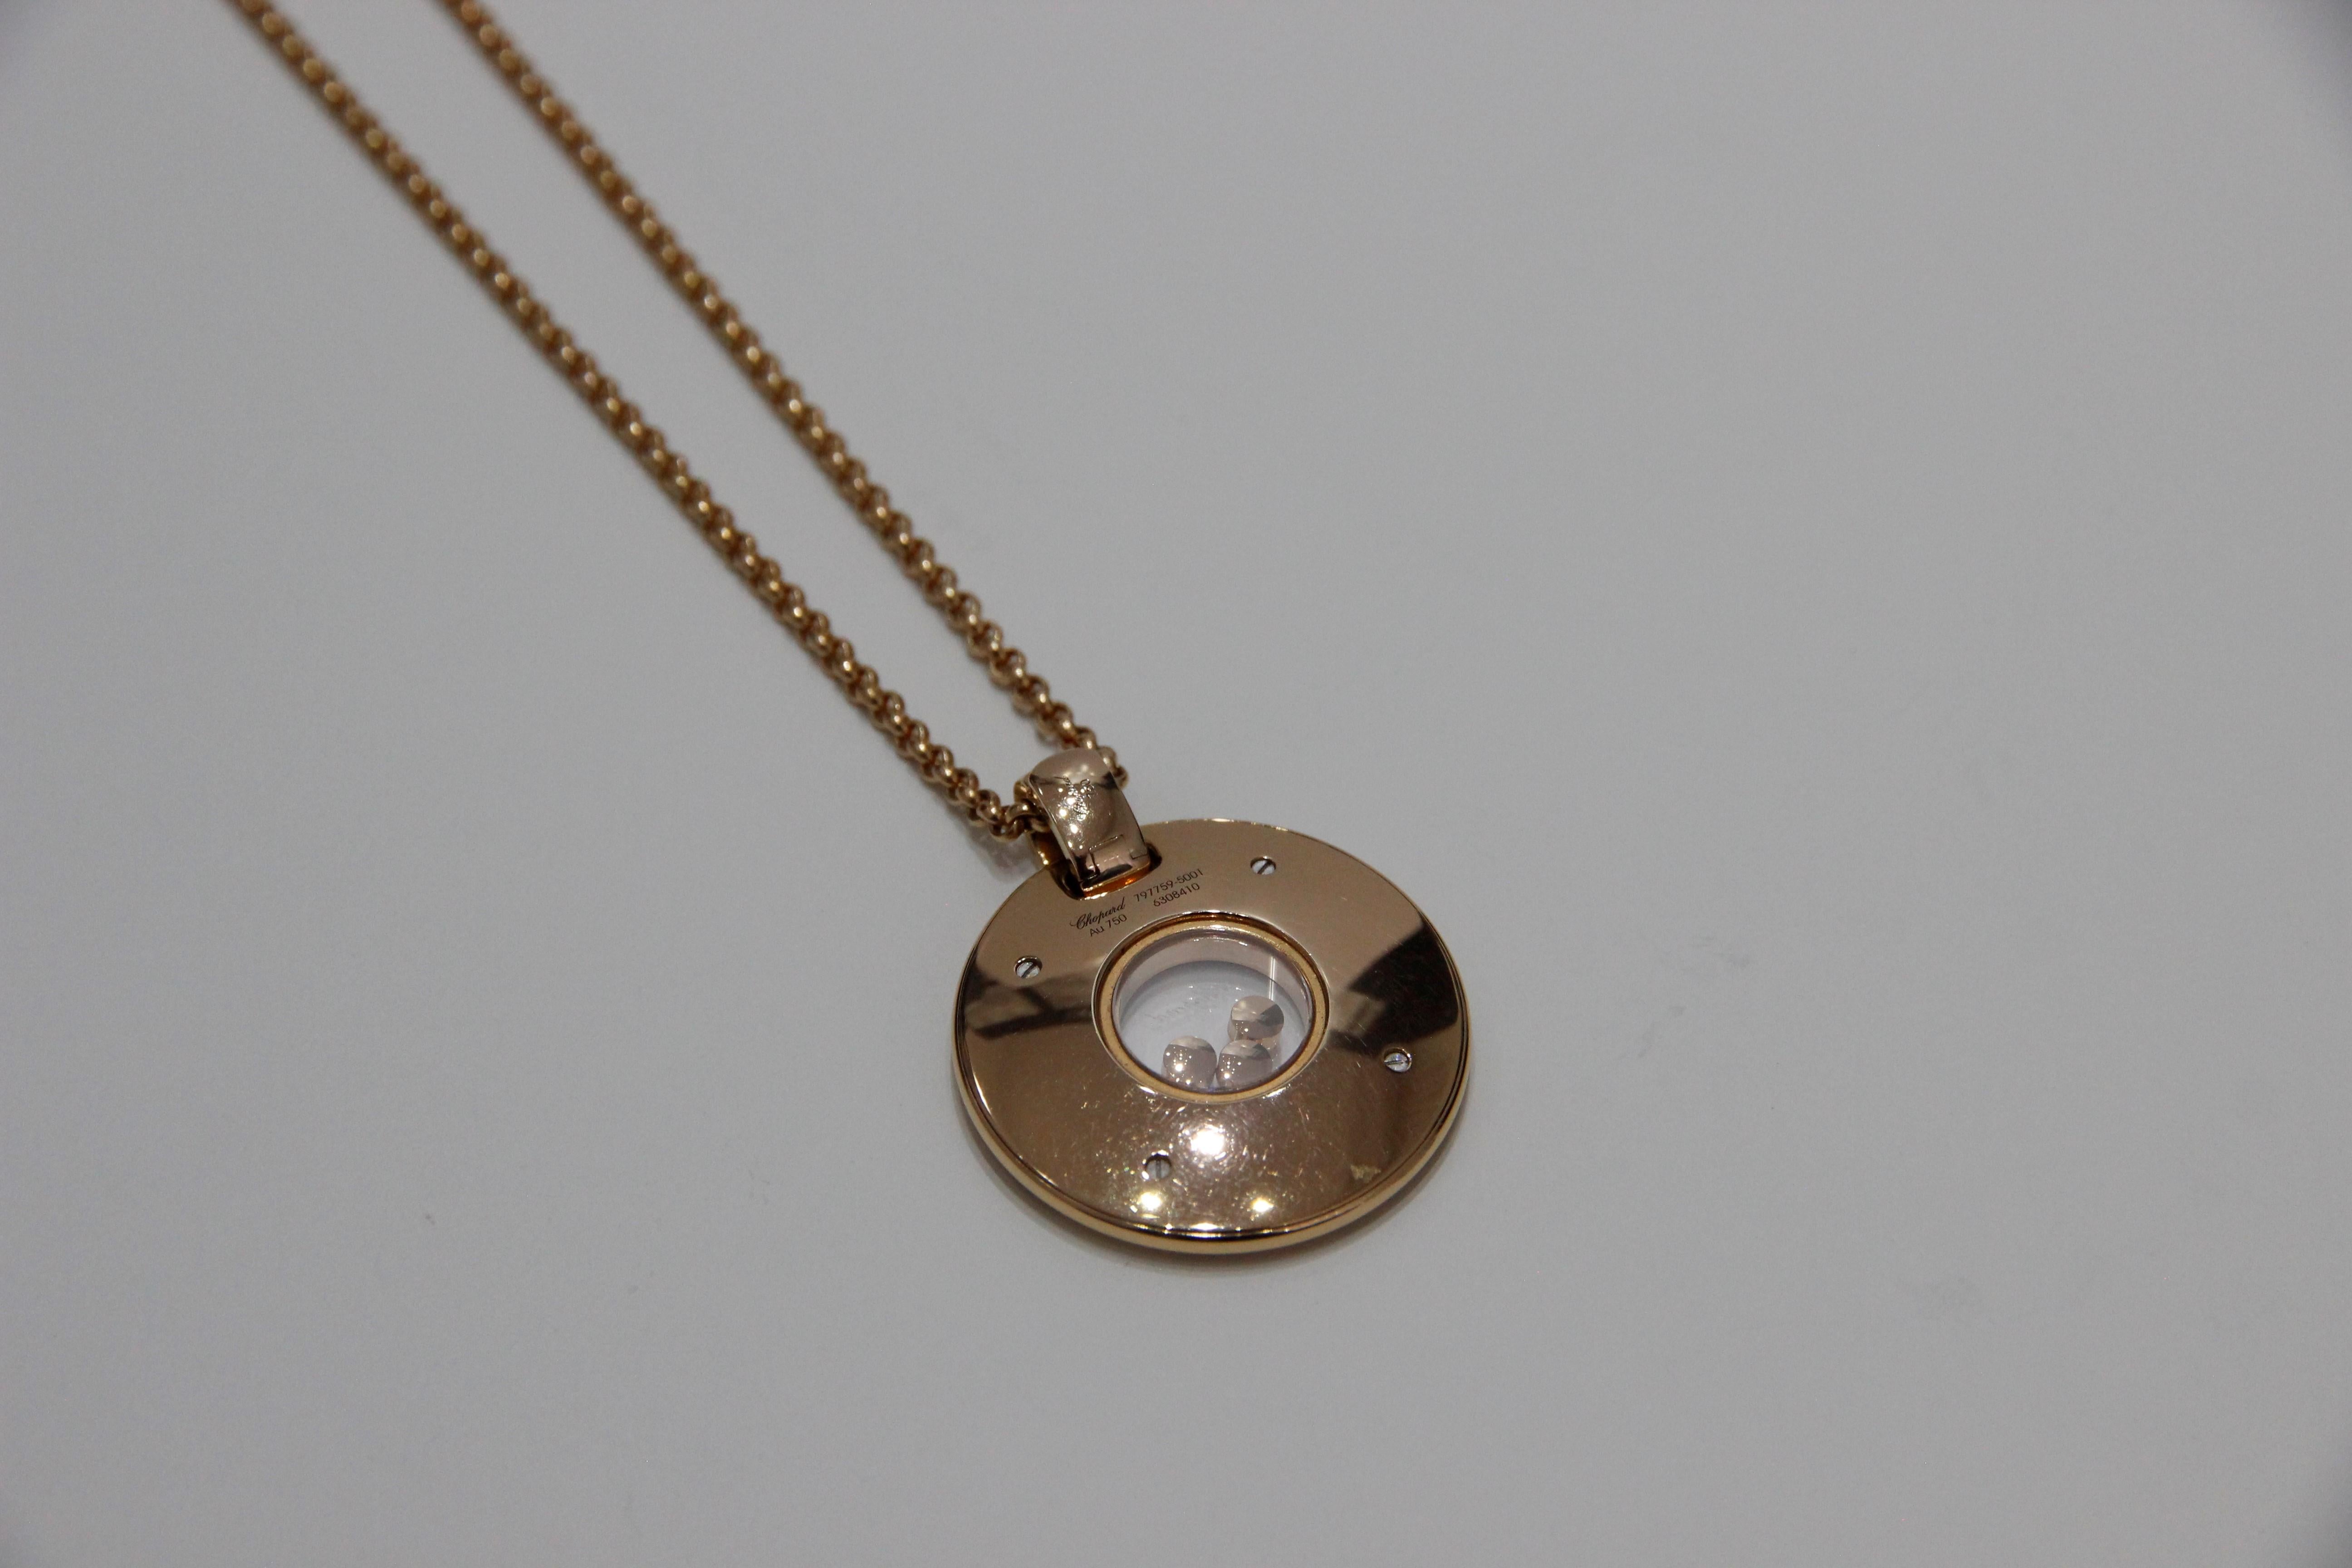 Chopard 18k Rose Gold Chopardissimo Necklace
Diamonds 0.17ctw
Chain Length 16